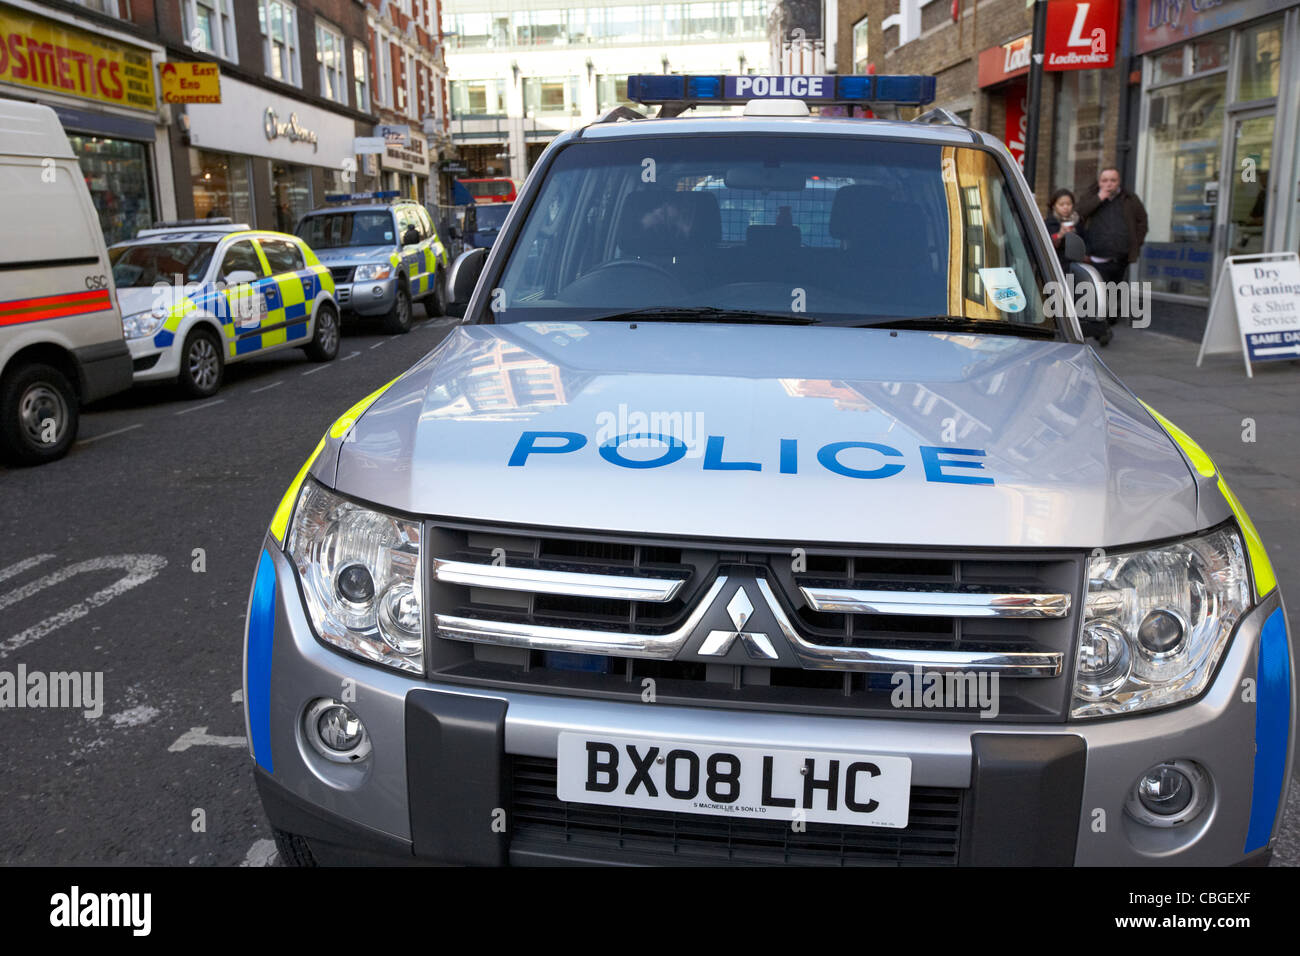 metropolitan police 4x4 vehicle in battenburg chequered livery london england uk united kingdom Stock Photo